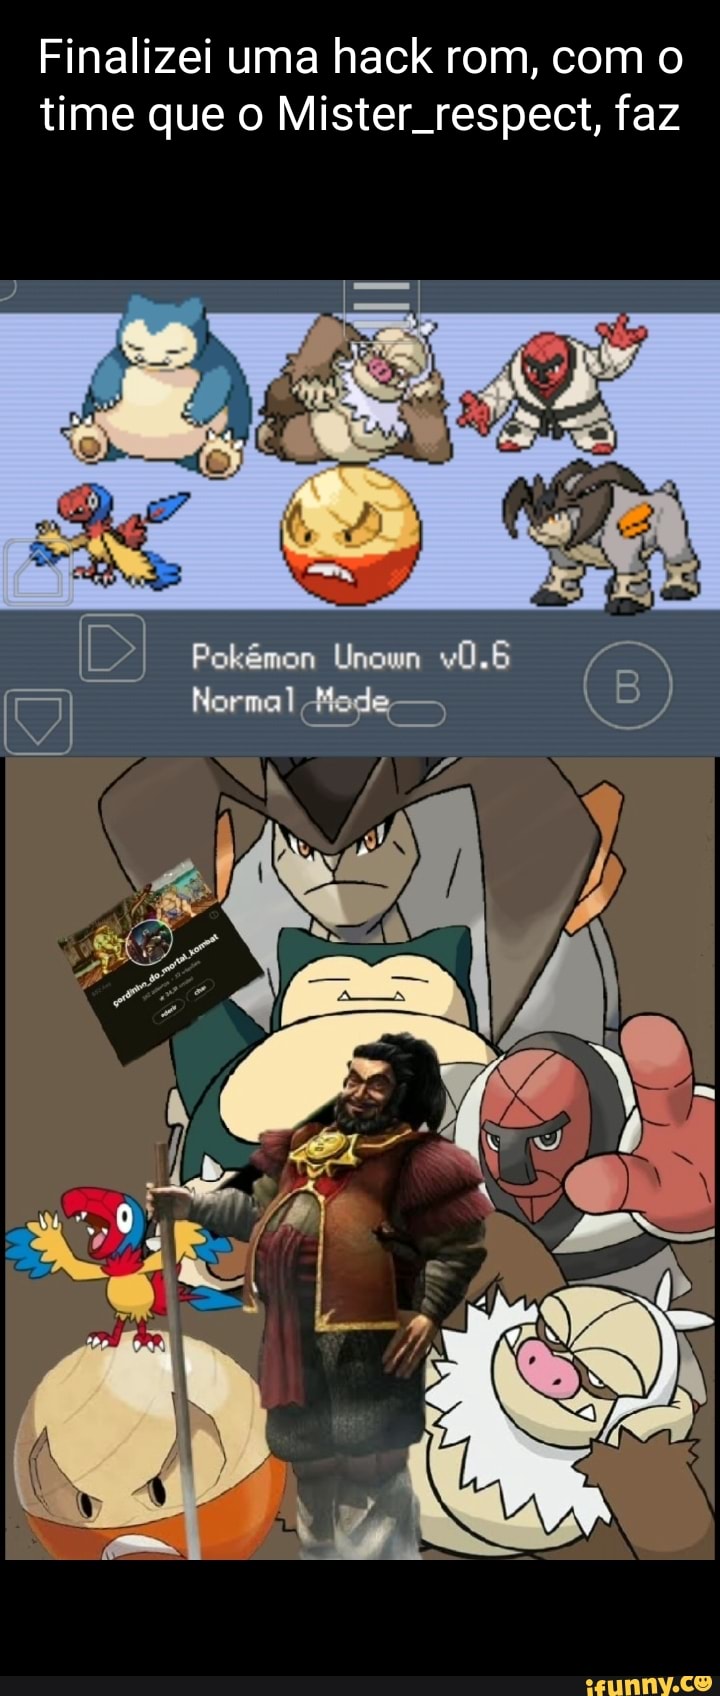 Pokémon Comedy Brasil - Coitado do Bulba 🙁 #pokemoncomedy #pokememes # pokemon